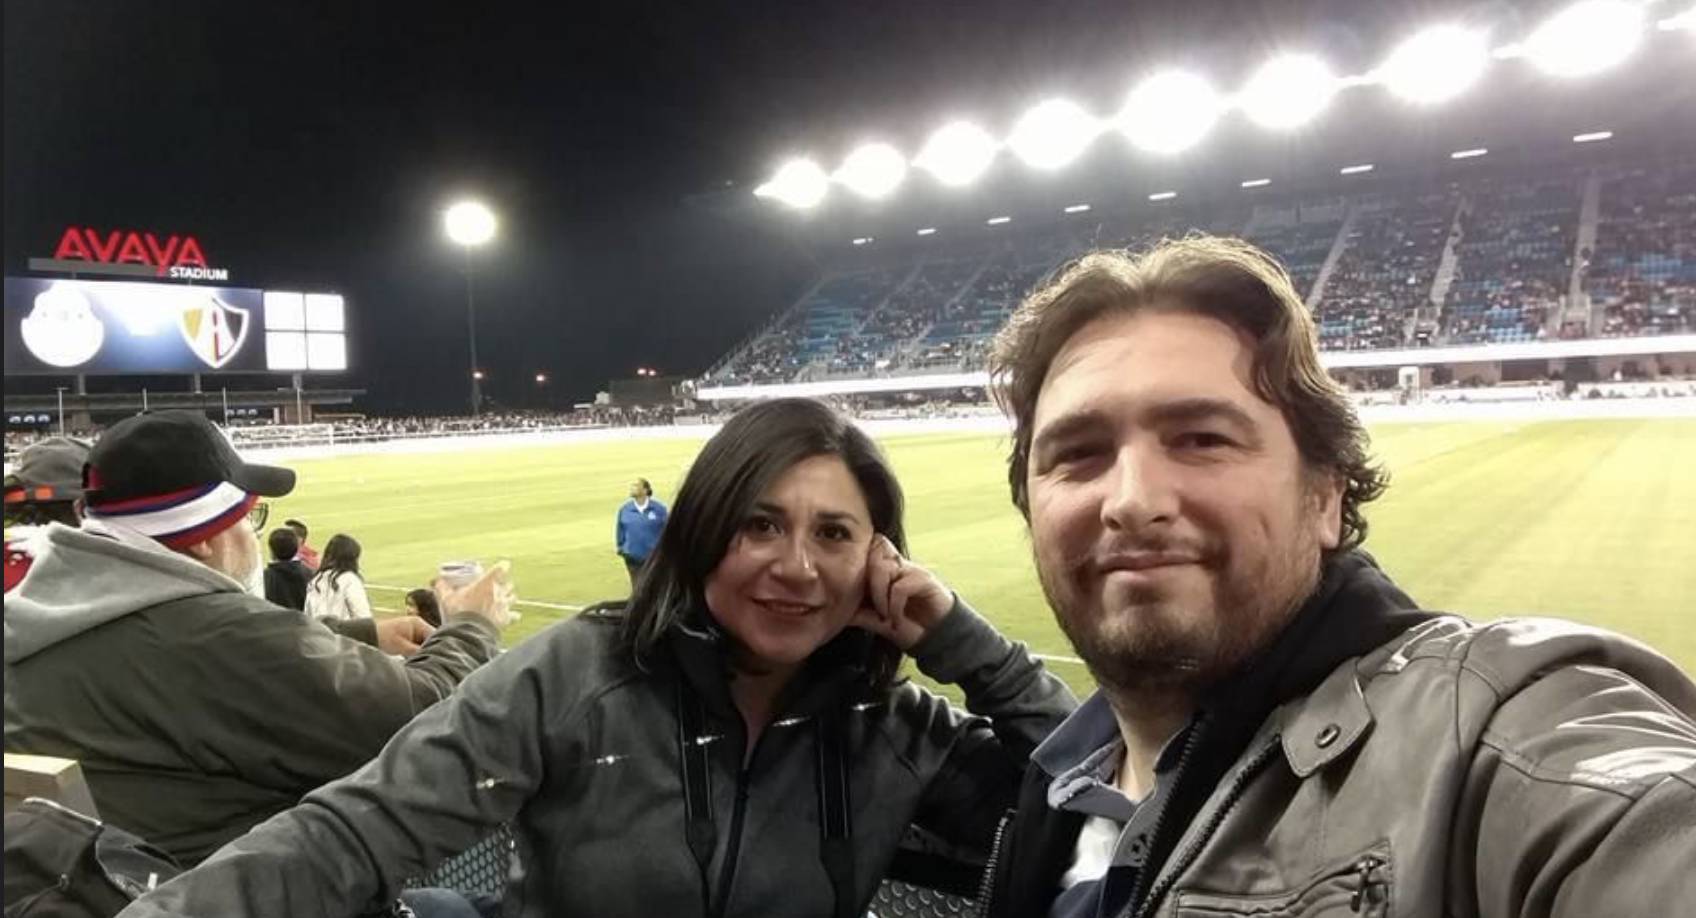 Federico and partner at stadium